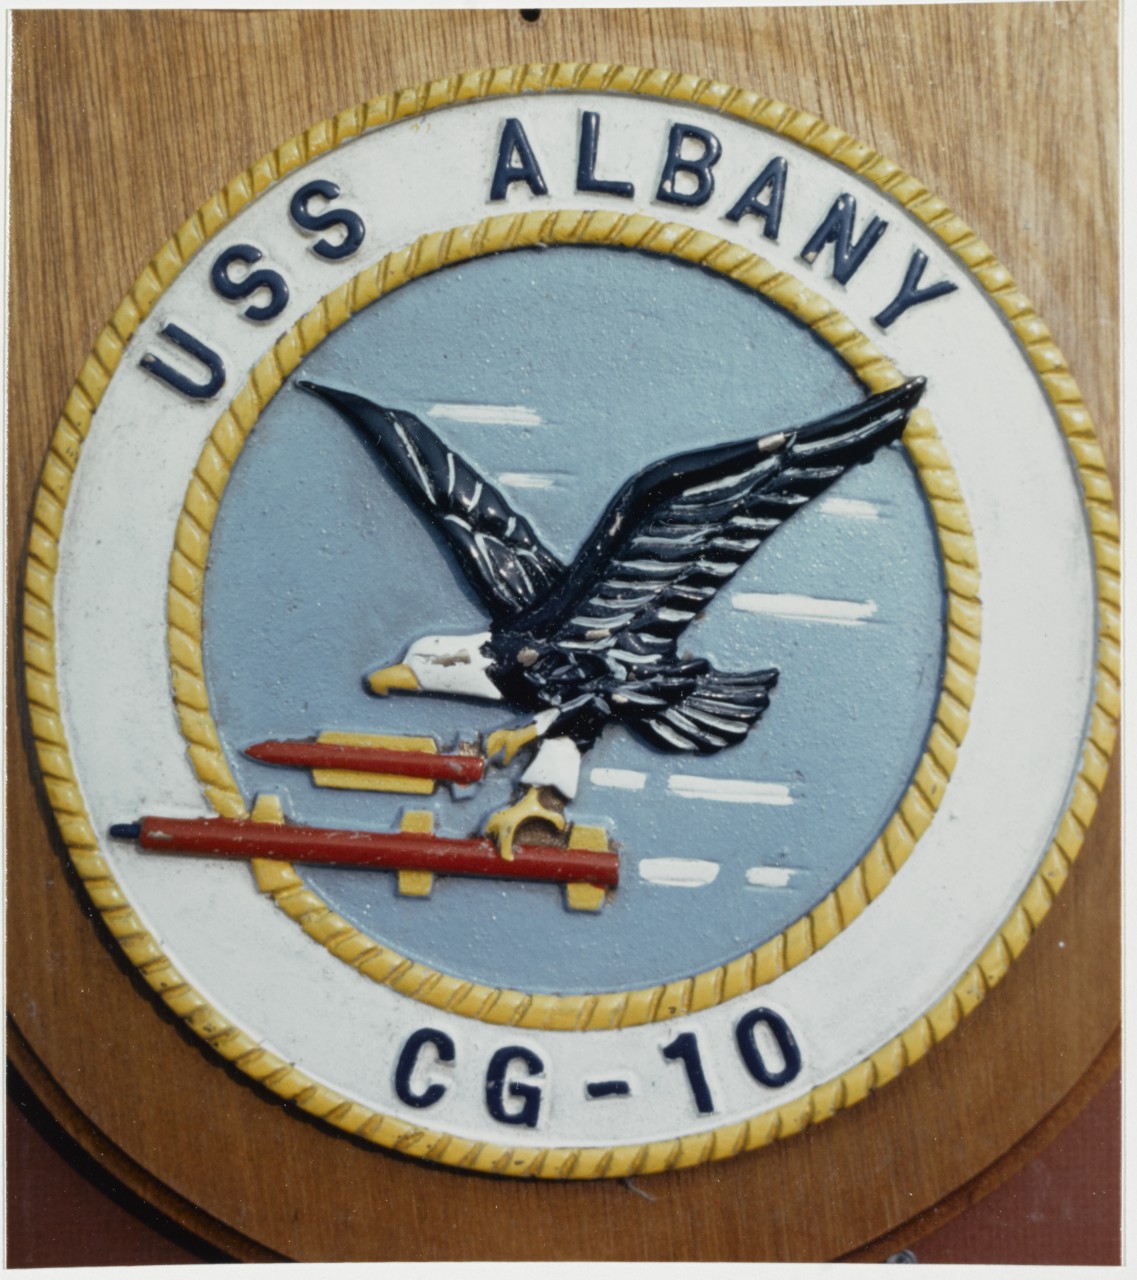 Insignia: USS ALBANY (CG-10) Emblem of 1960s vintage